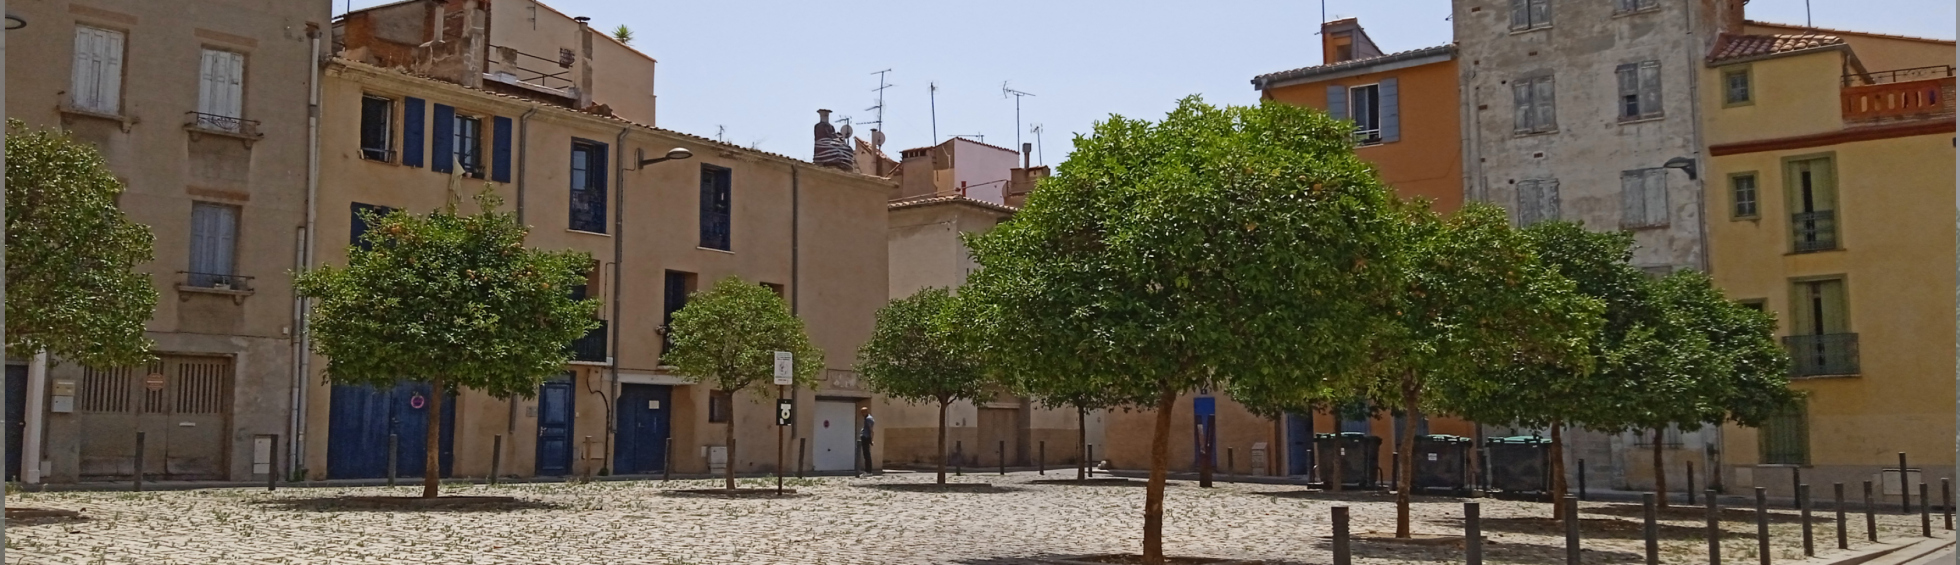 Quartier Saint Mathieu de Perpignan